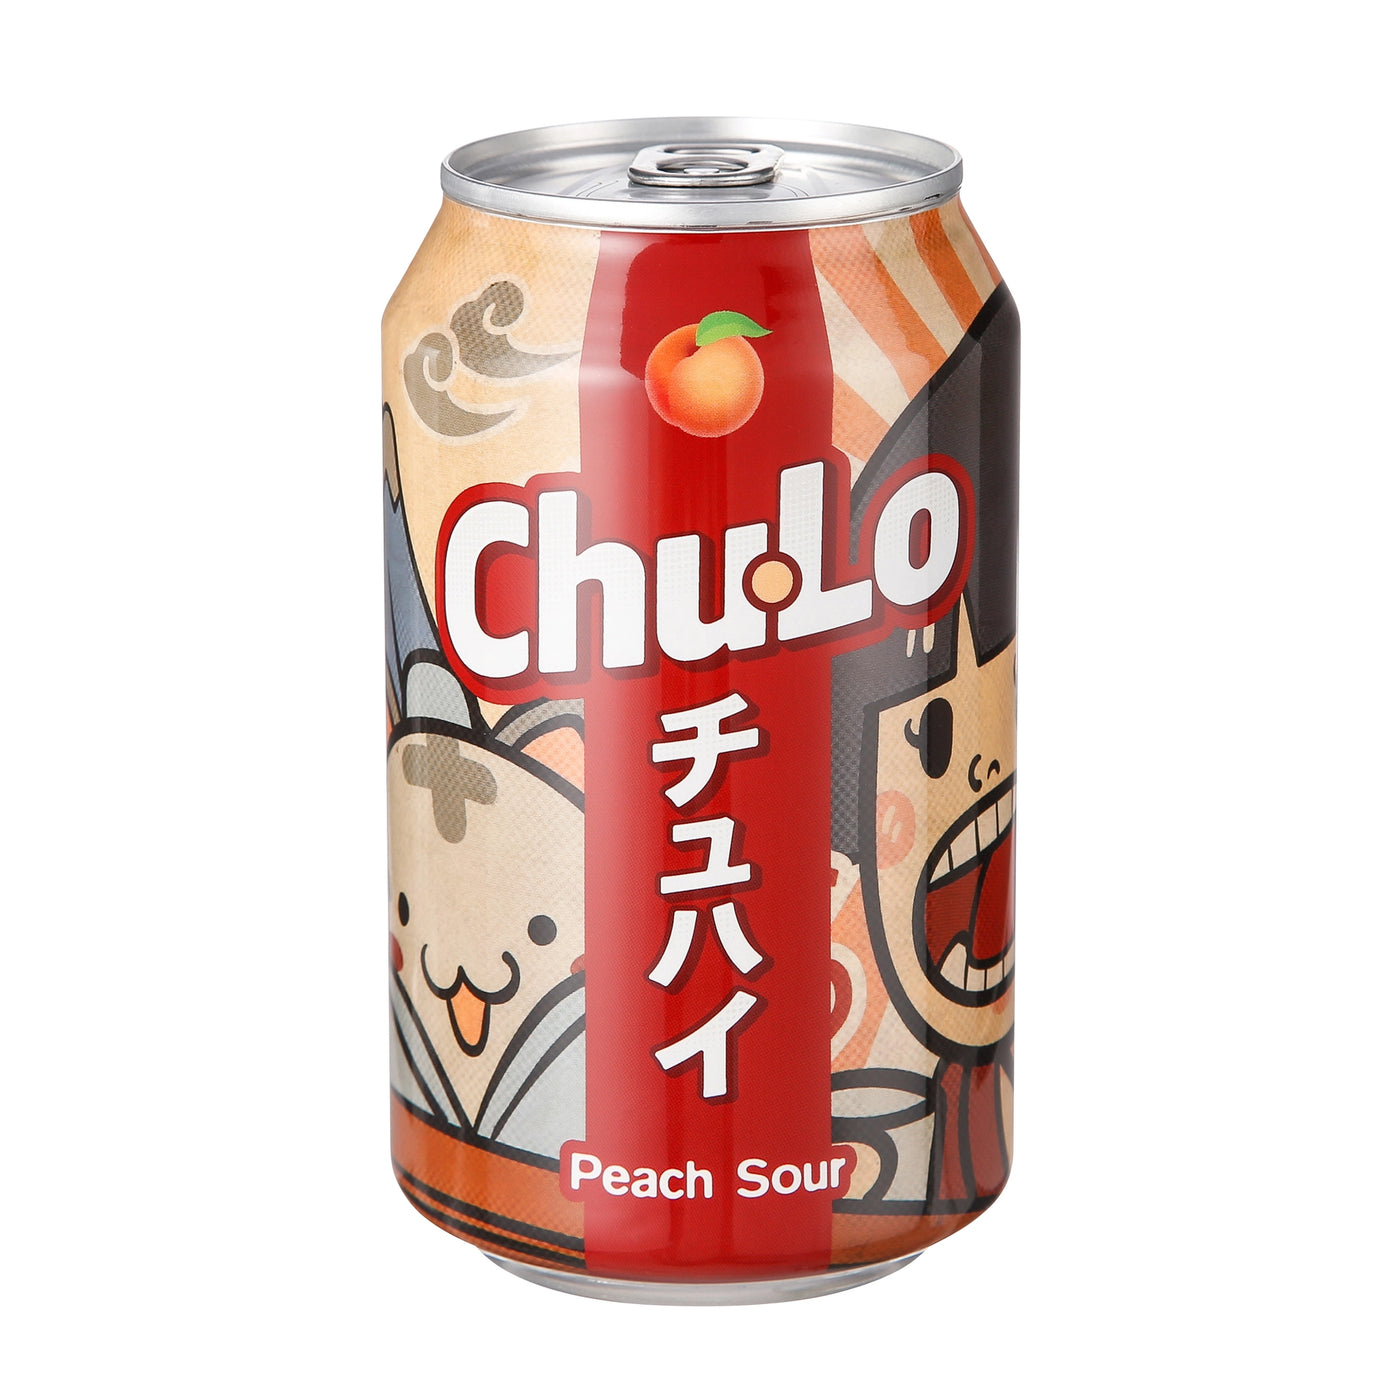 Chu Lo Peach Sour Drink - stylecreep.com